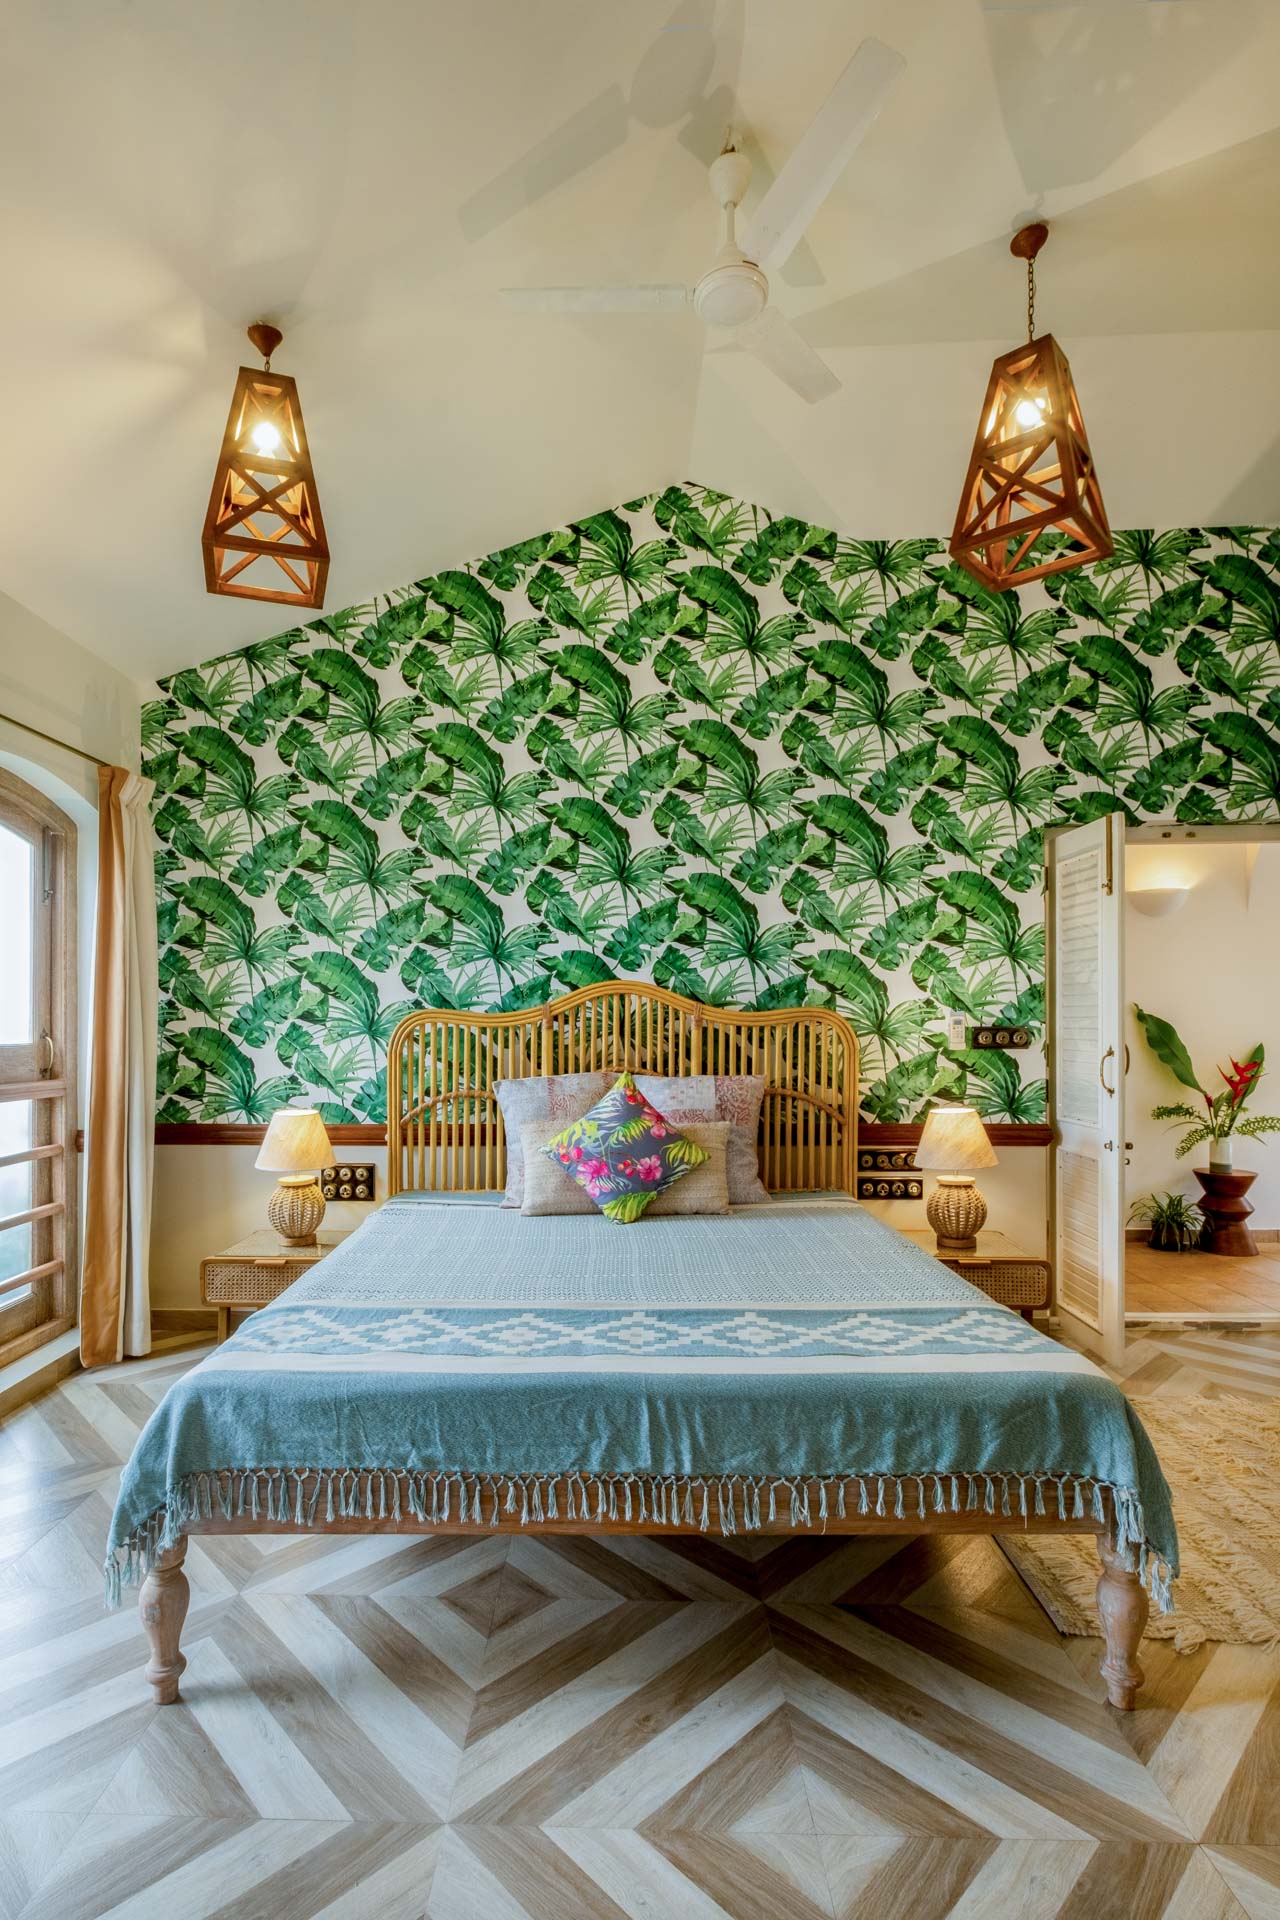 Fonteira Villa D - Premium Villas for Sale in Goa - Stunning Bedroom